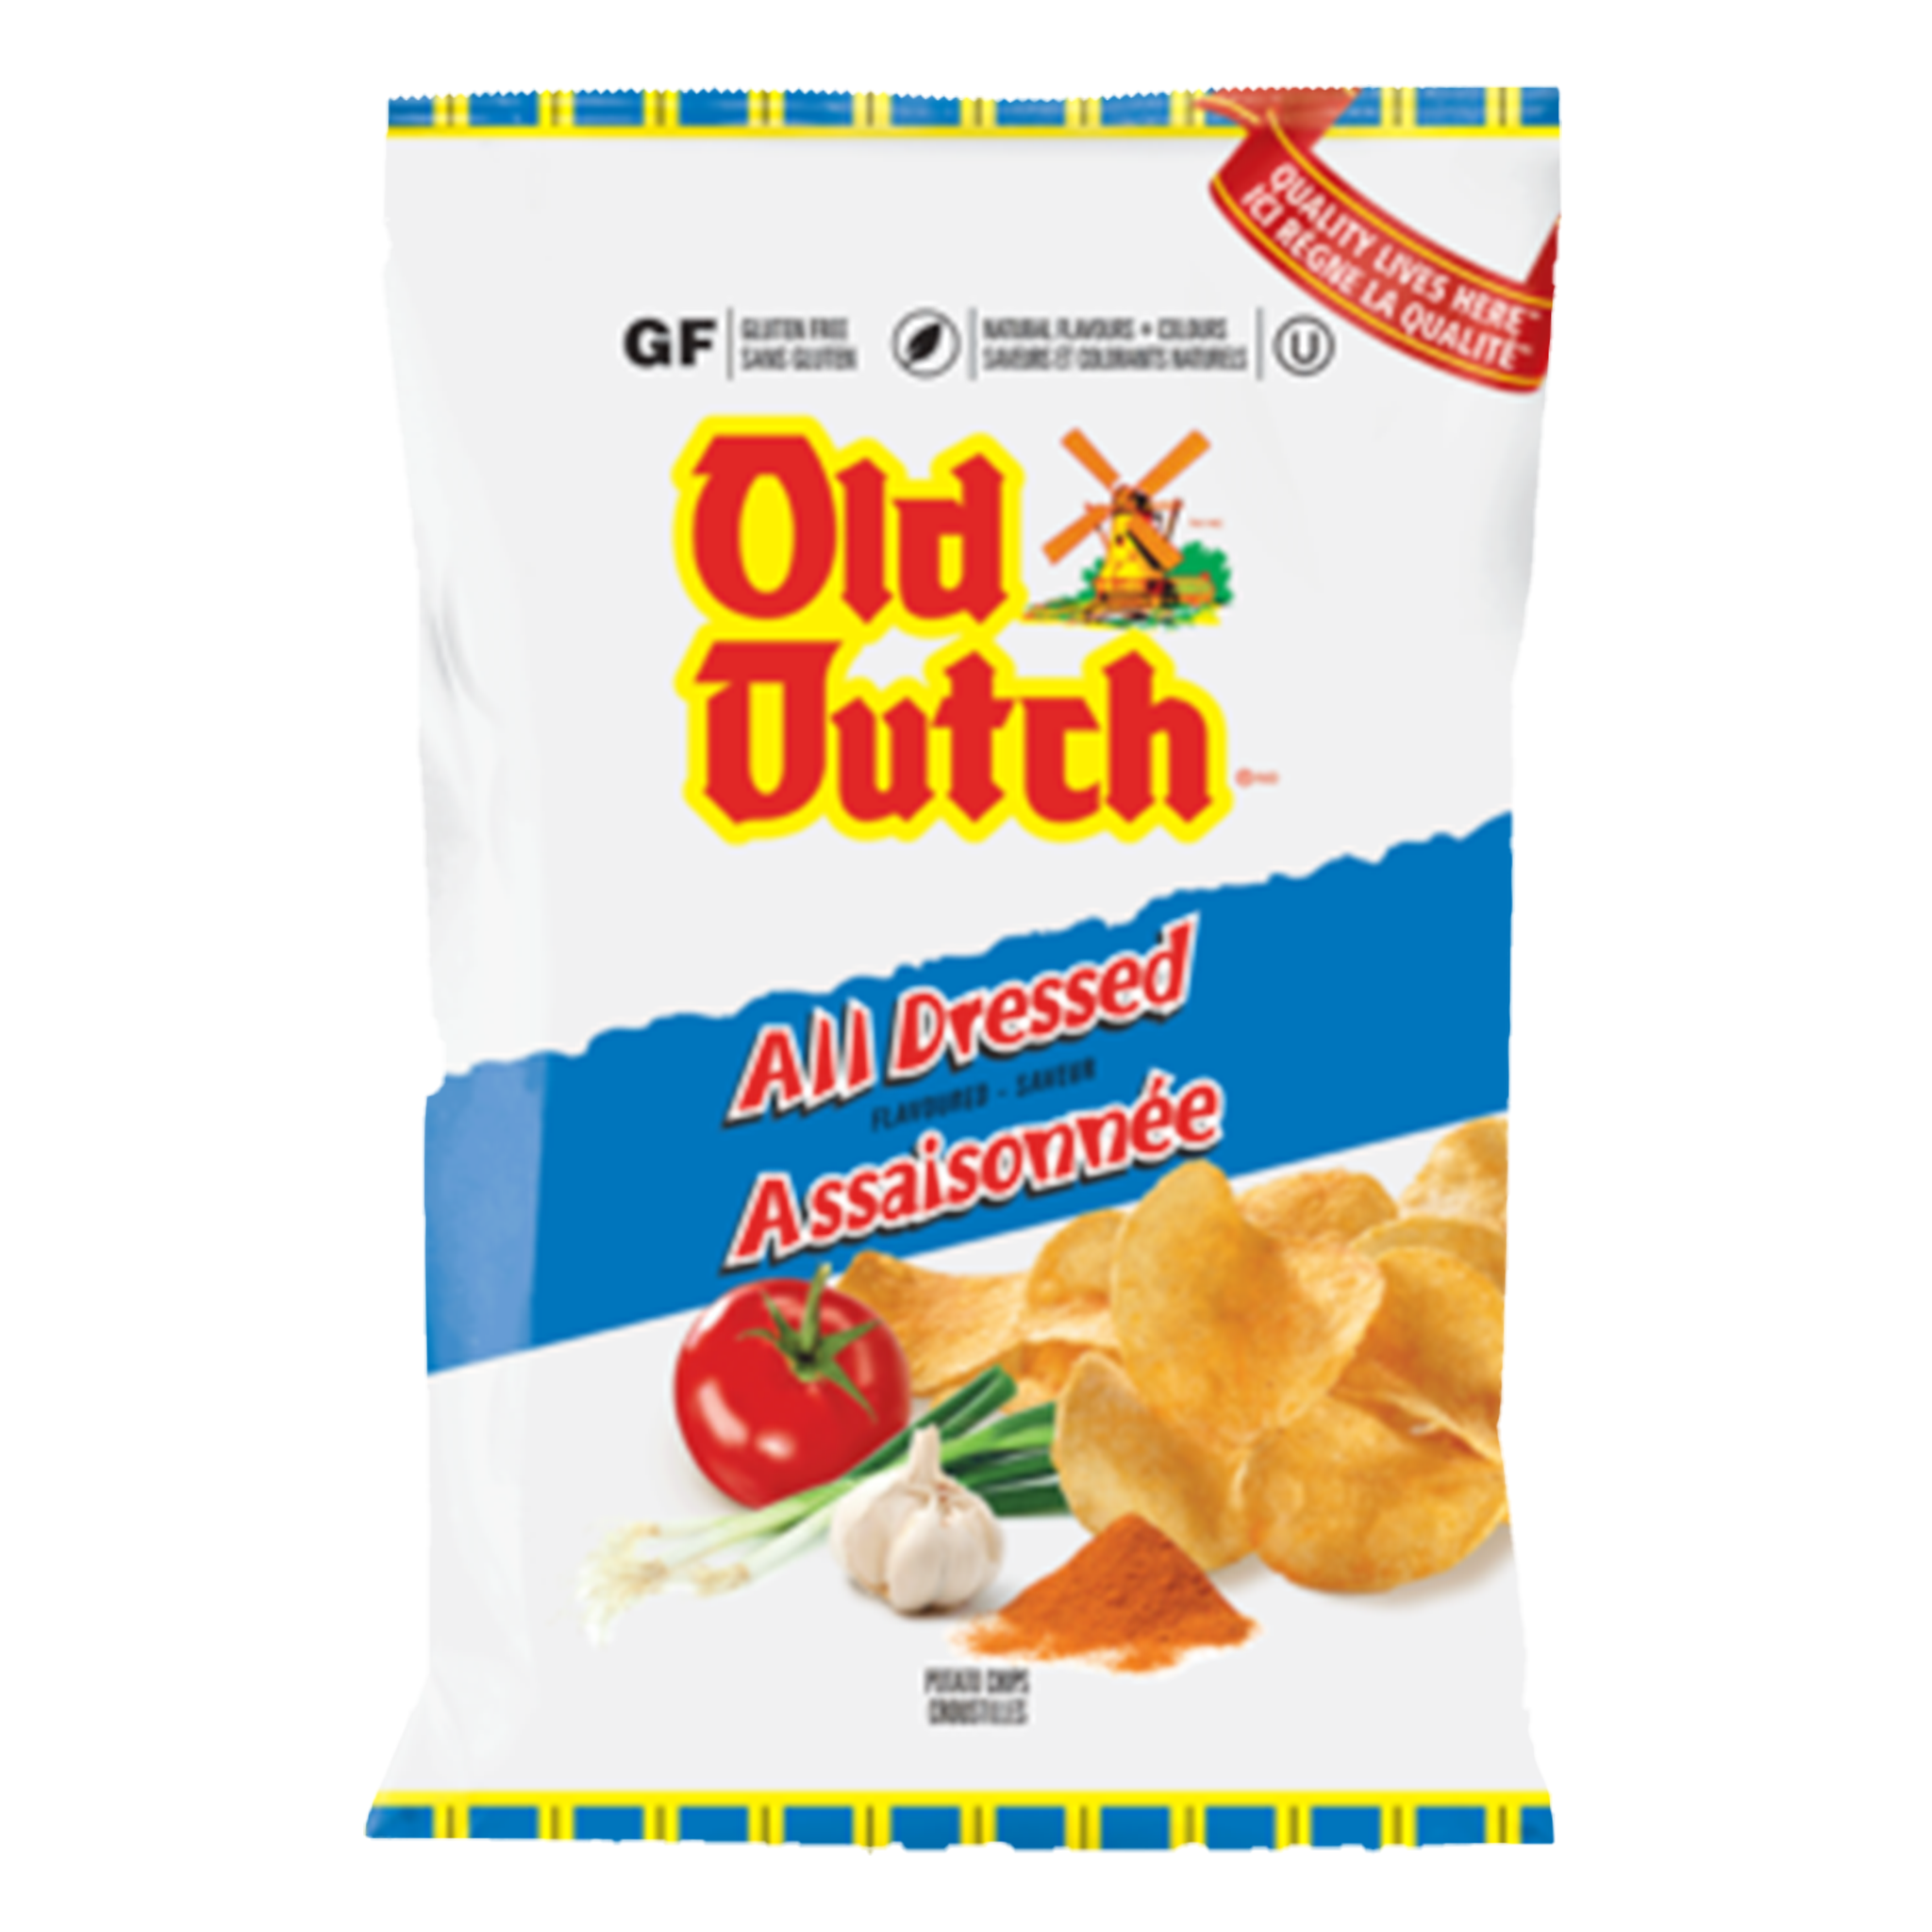 Old Dutch - All Dressed